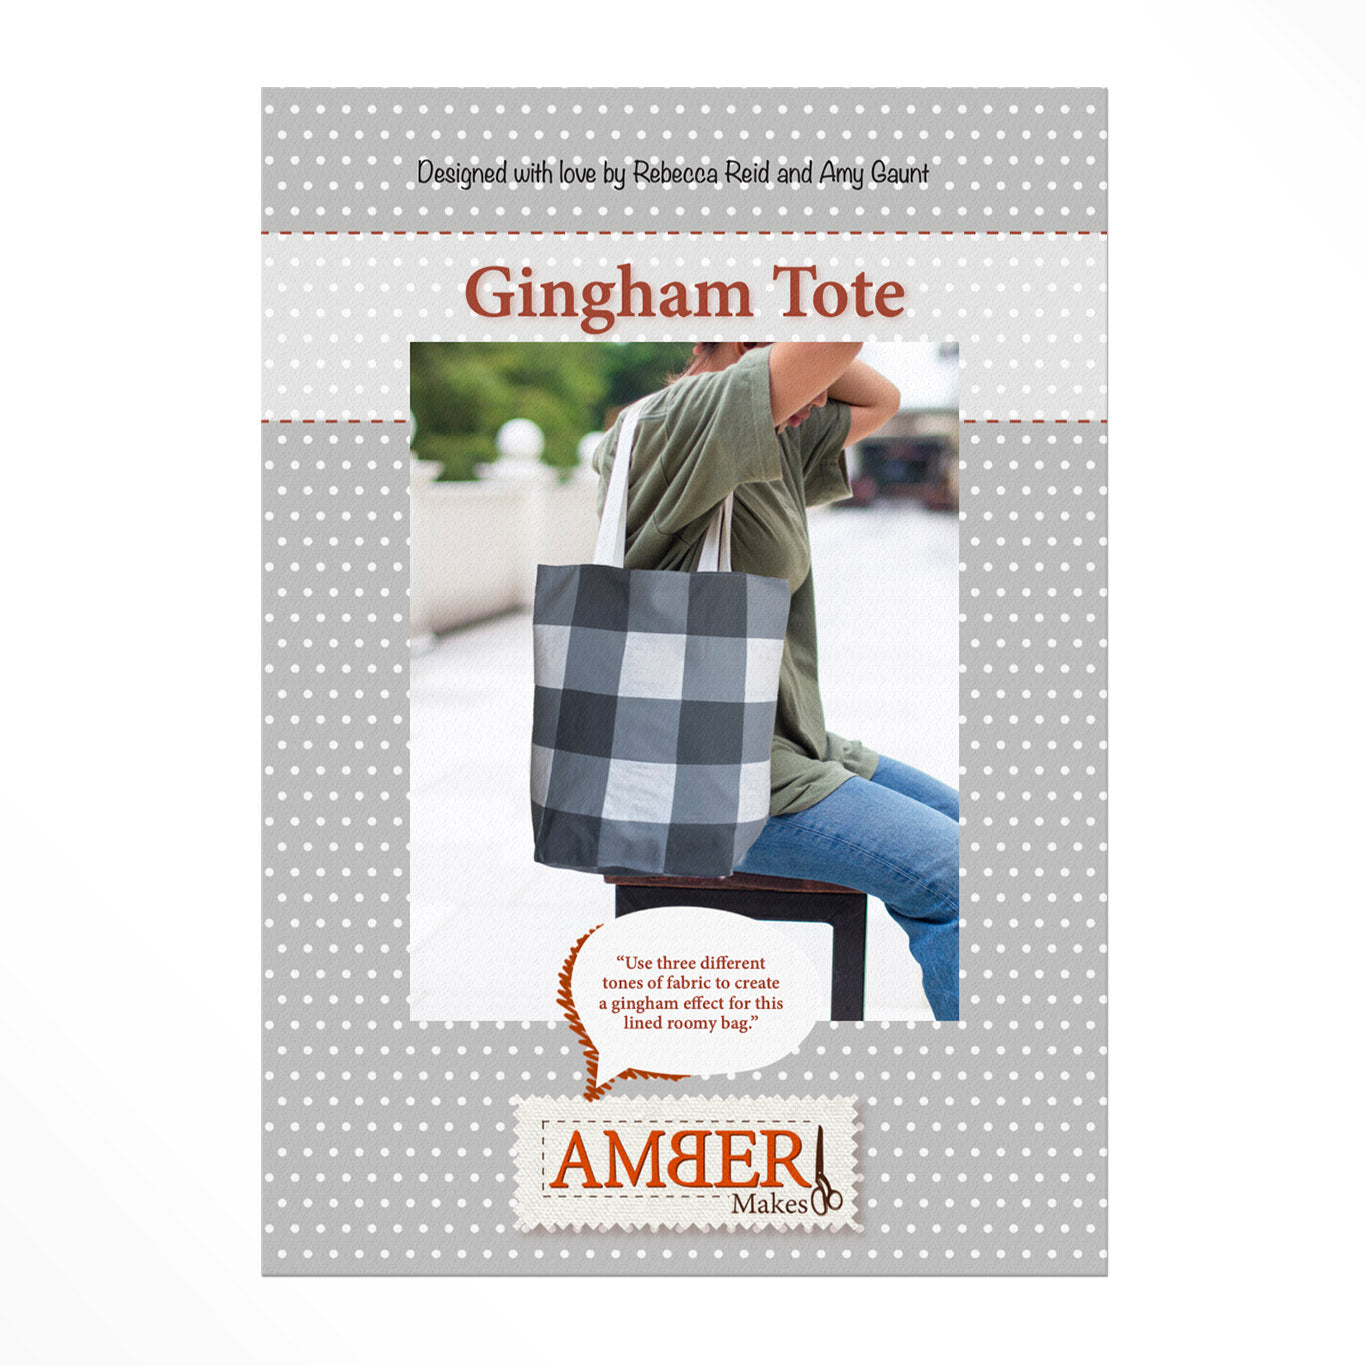 Gingham Tote Bag – PDF Download Instructions Booklet